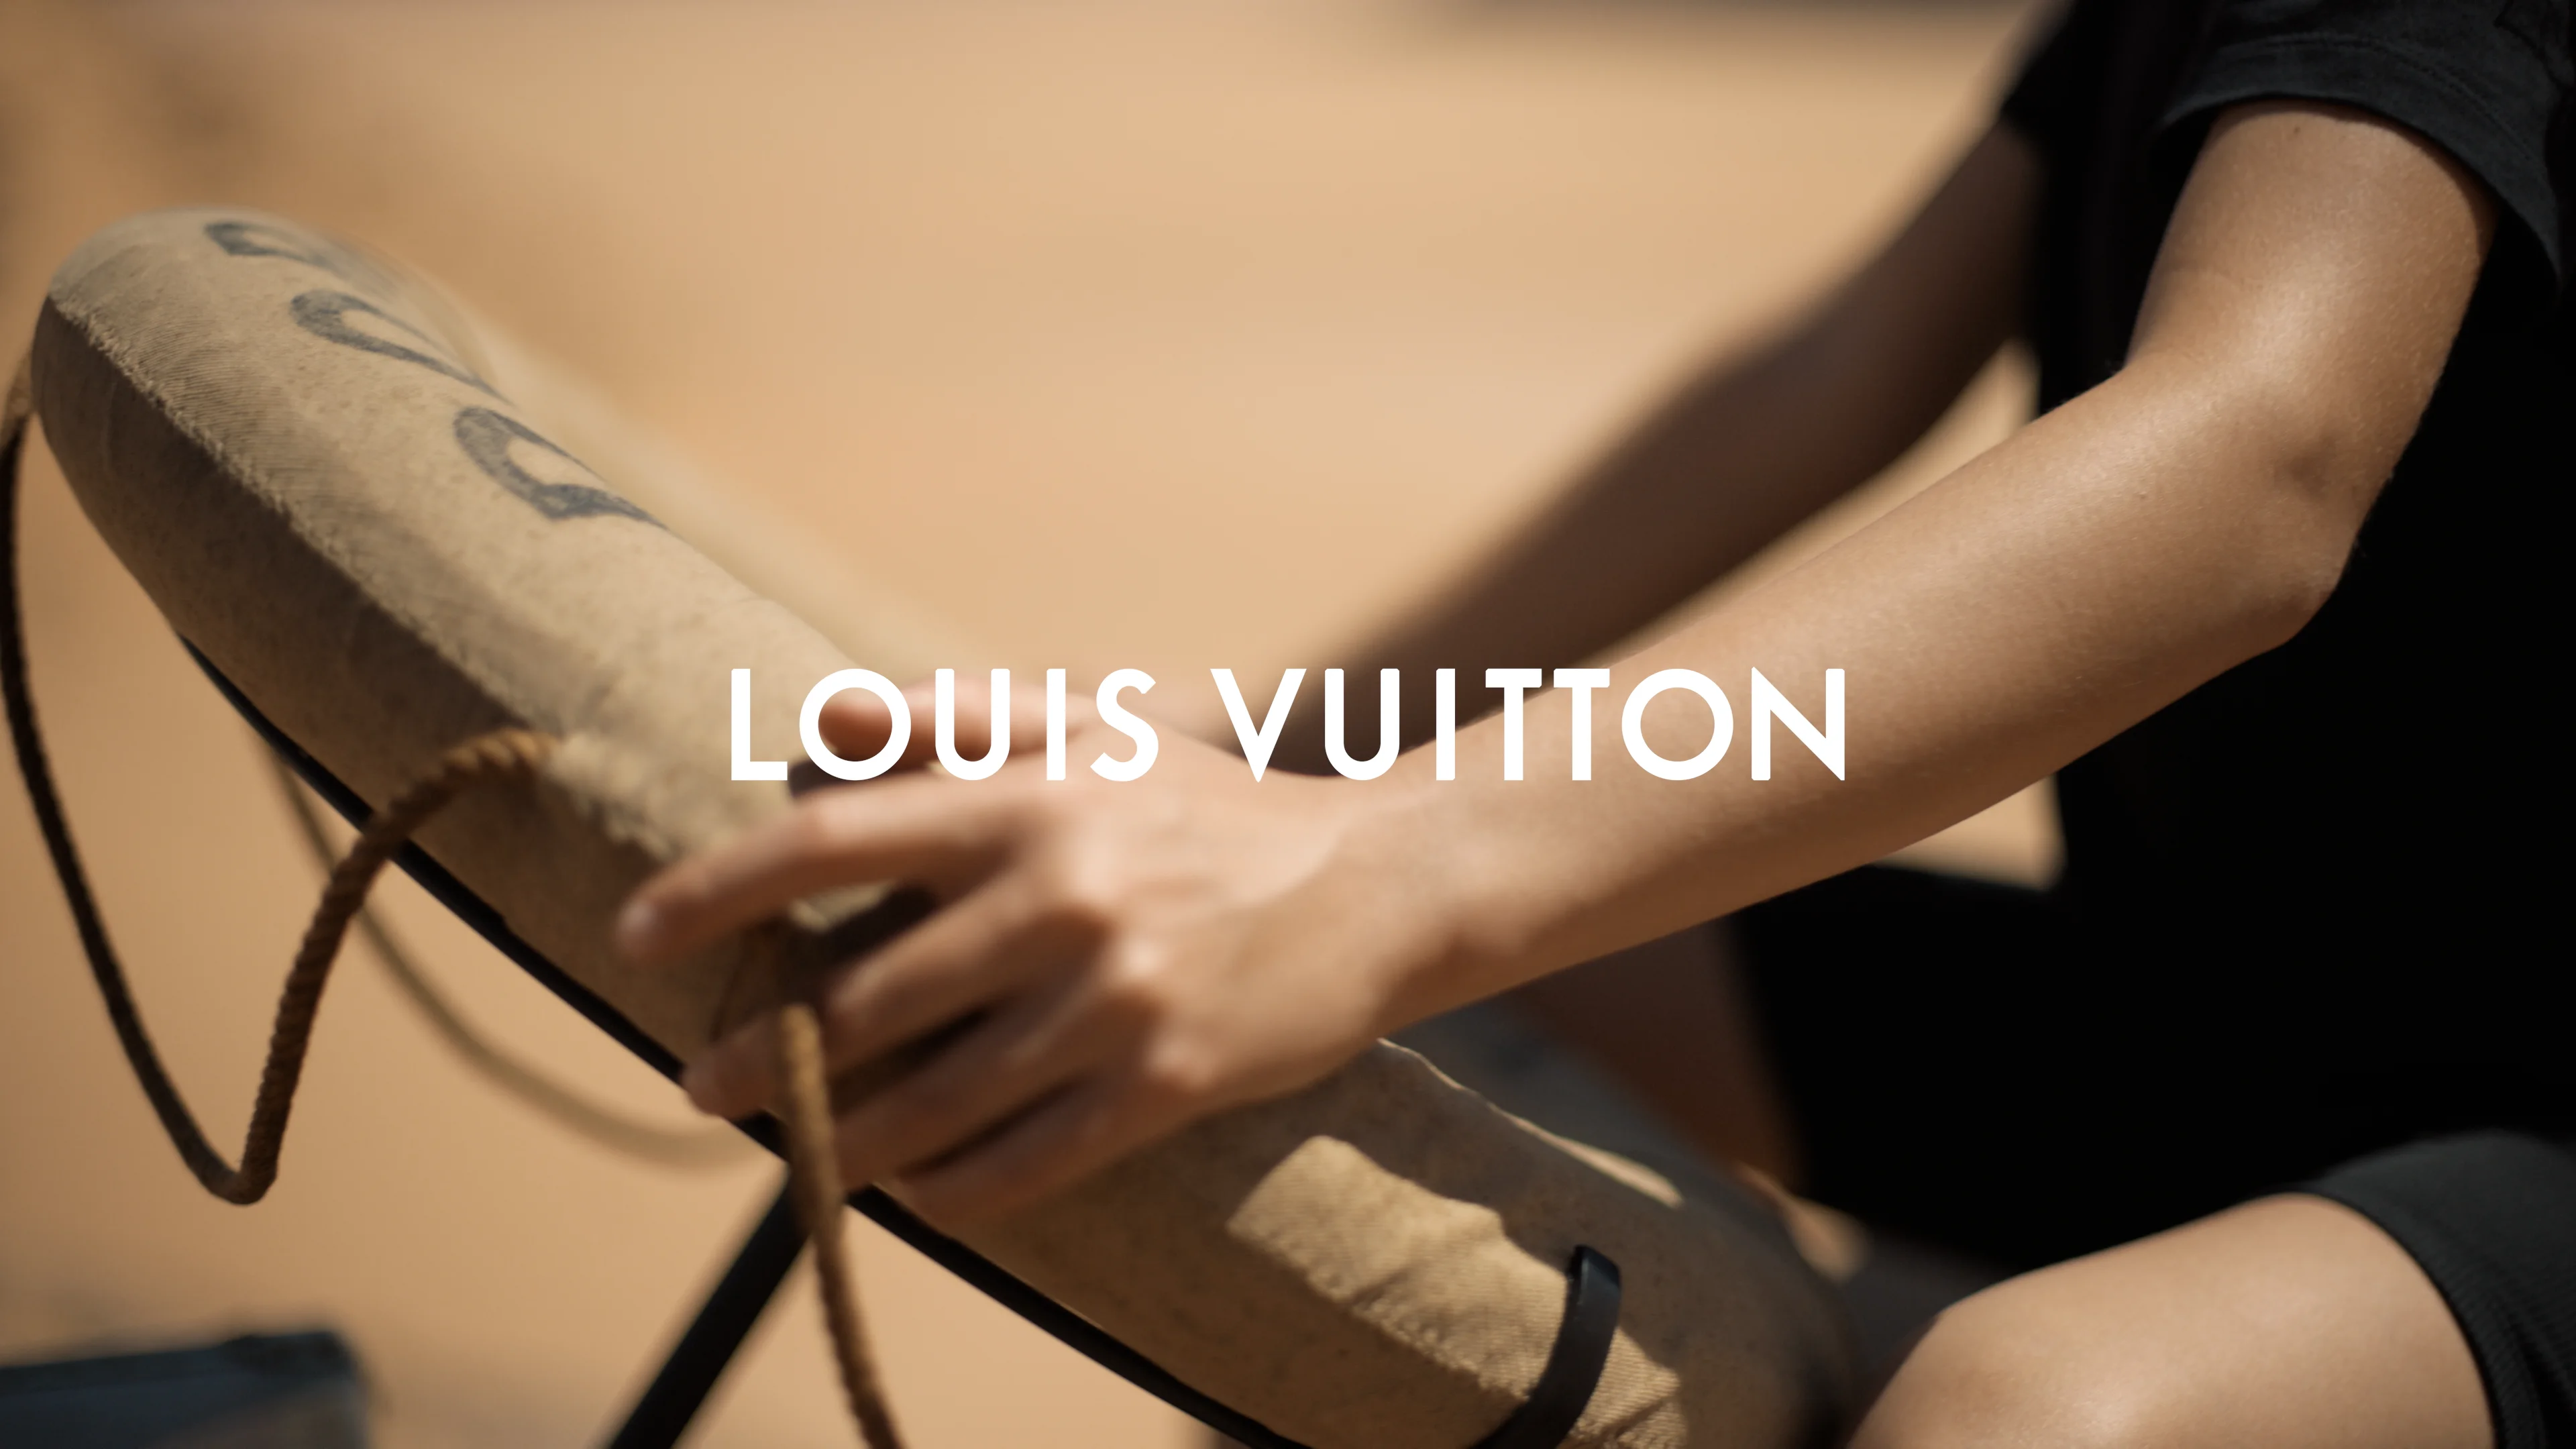 LOUIS VUITTON - Towards A Dream : Milos, Greece on Vimeo